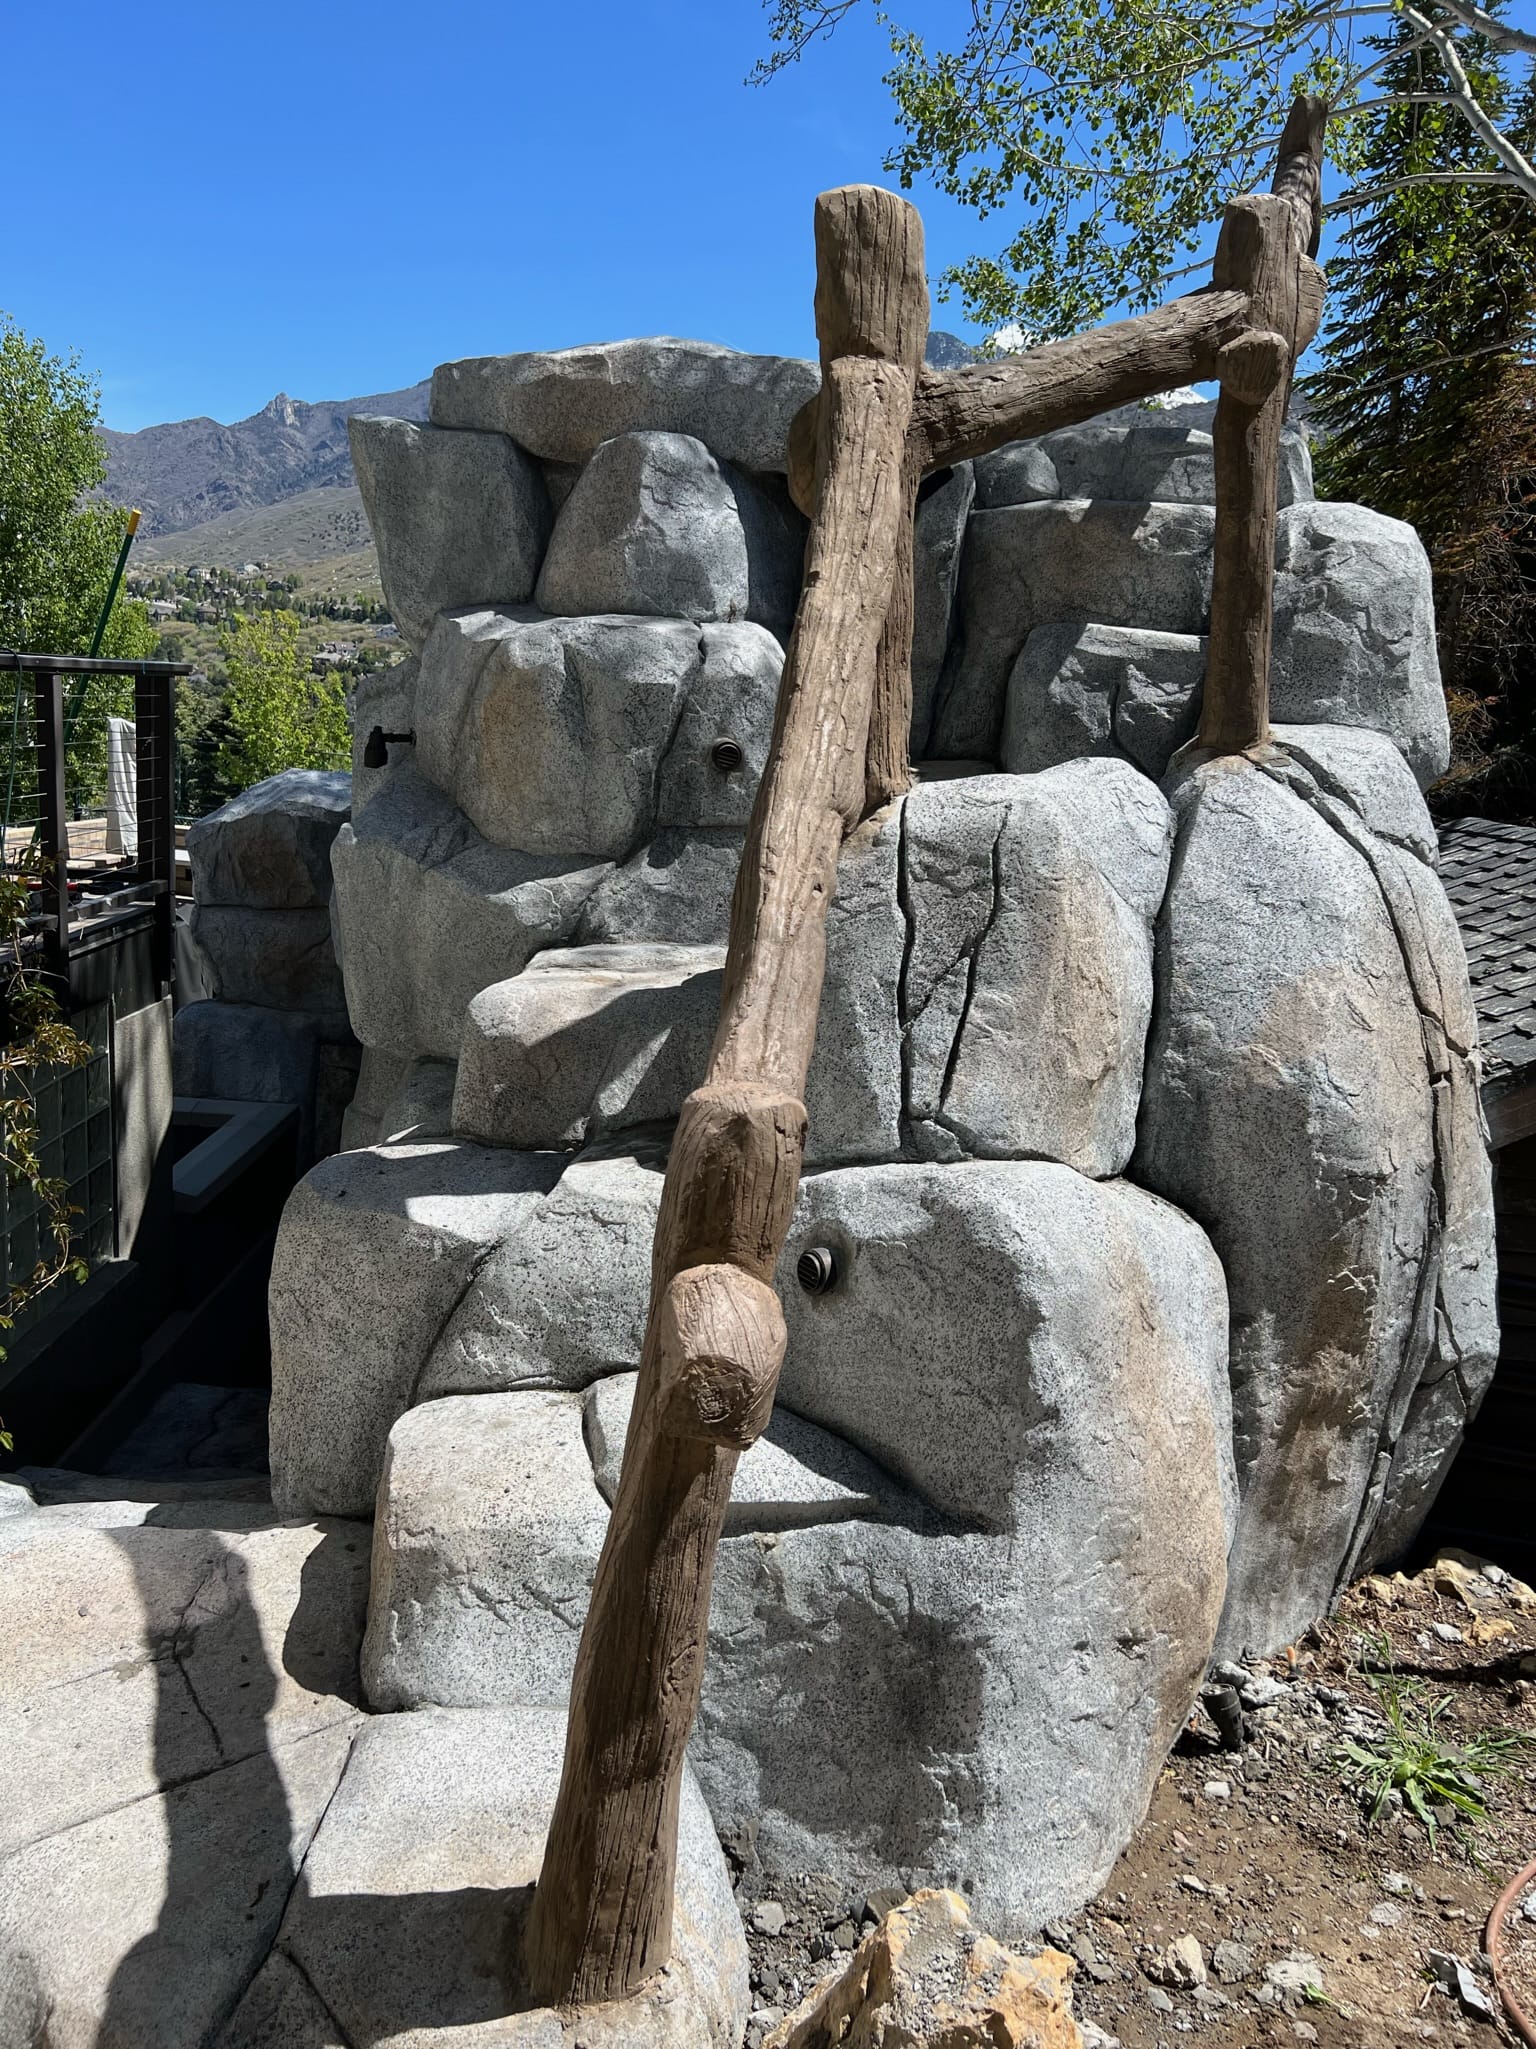 Artificial Concrete Rock Work with natural rock and wood aesthetic in Salt Lake City, Utah backyard patio